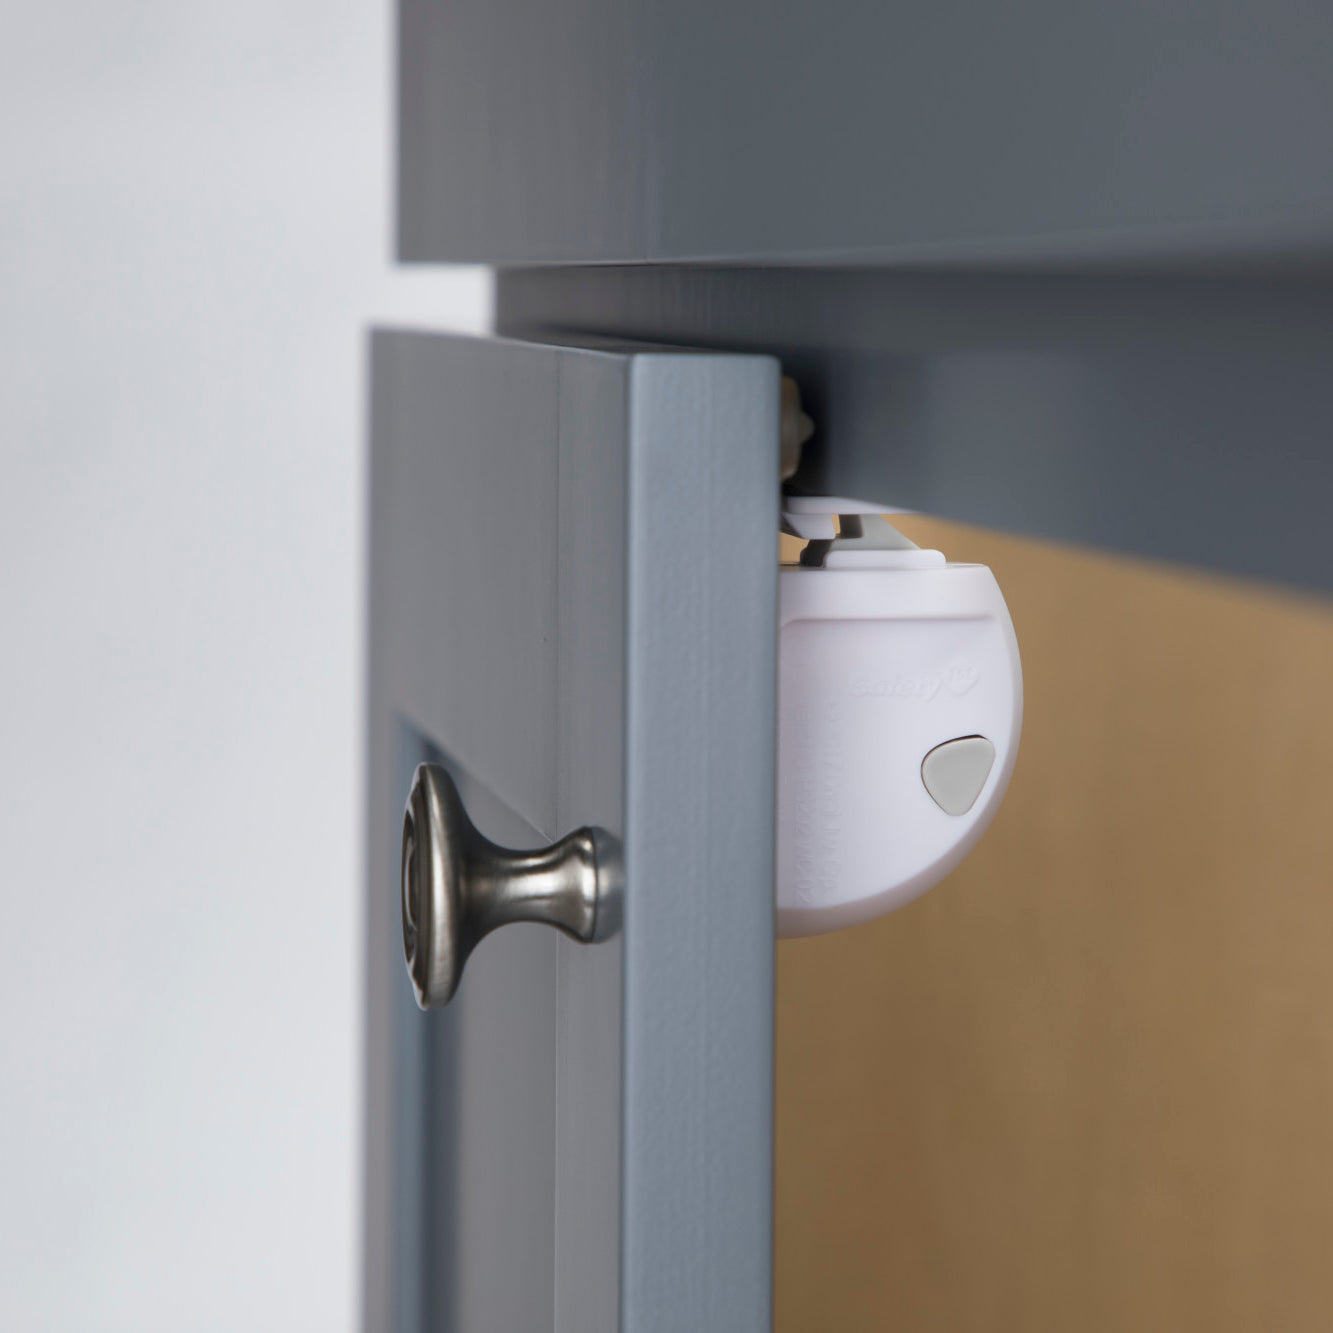 Magnetic lock shown on a cabinet door